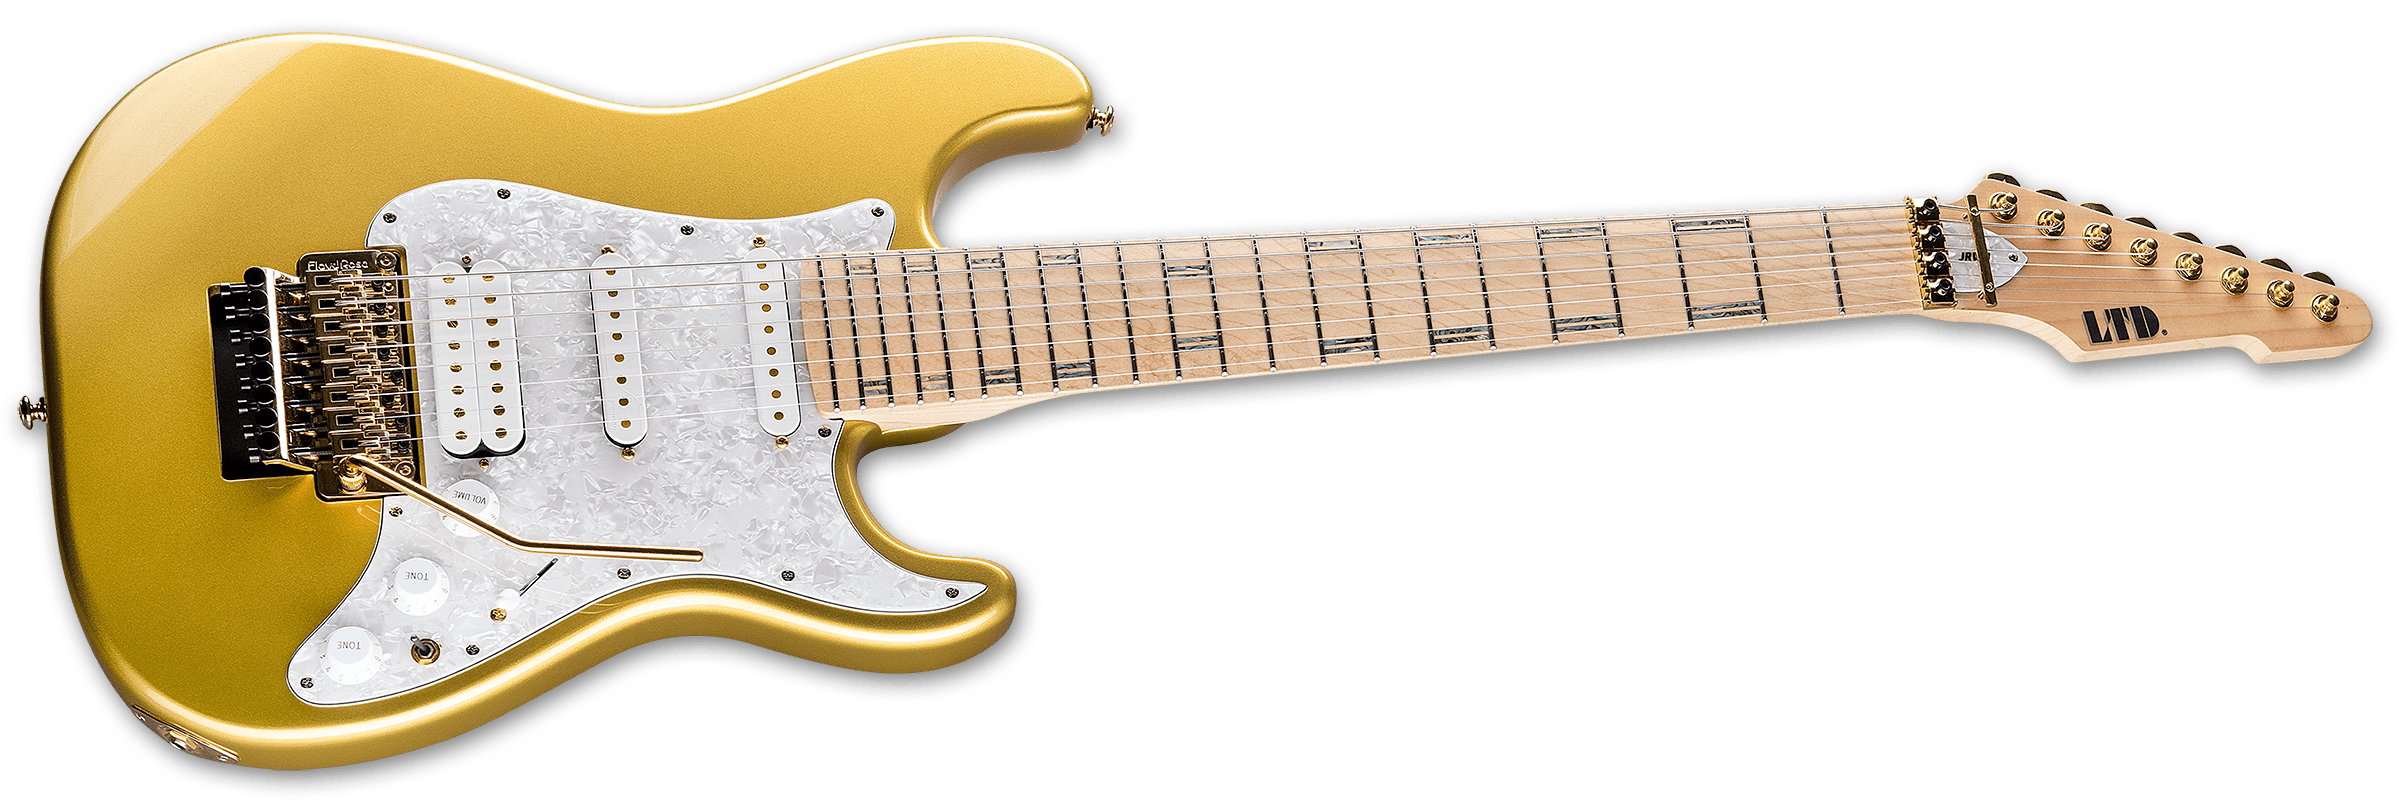 Ltd Jrv8 8-cordes Hss Trem Mn - Metallic Gold - 7 string electric guitar - Variation 2